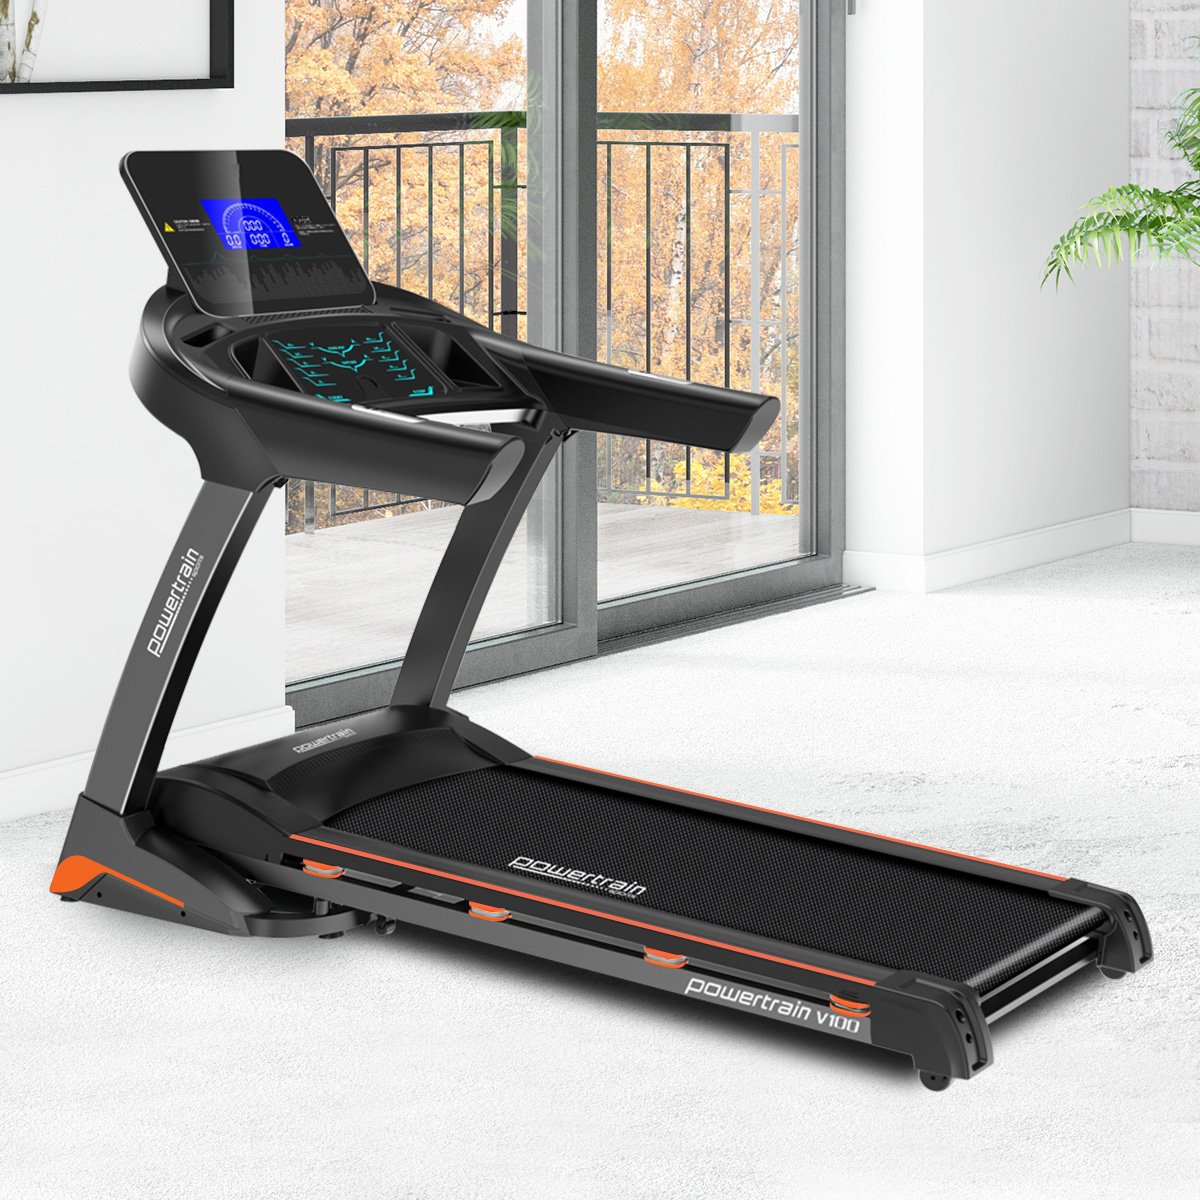 Powertrain V100 Foldable Treadmill Auto Incline Home Gym Cardio 2